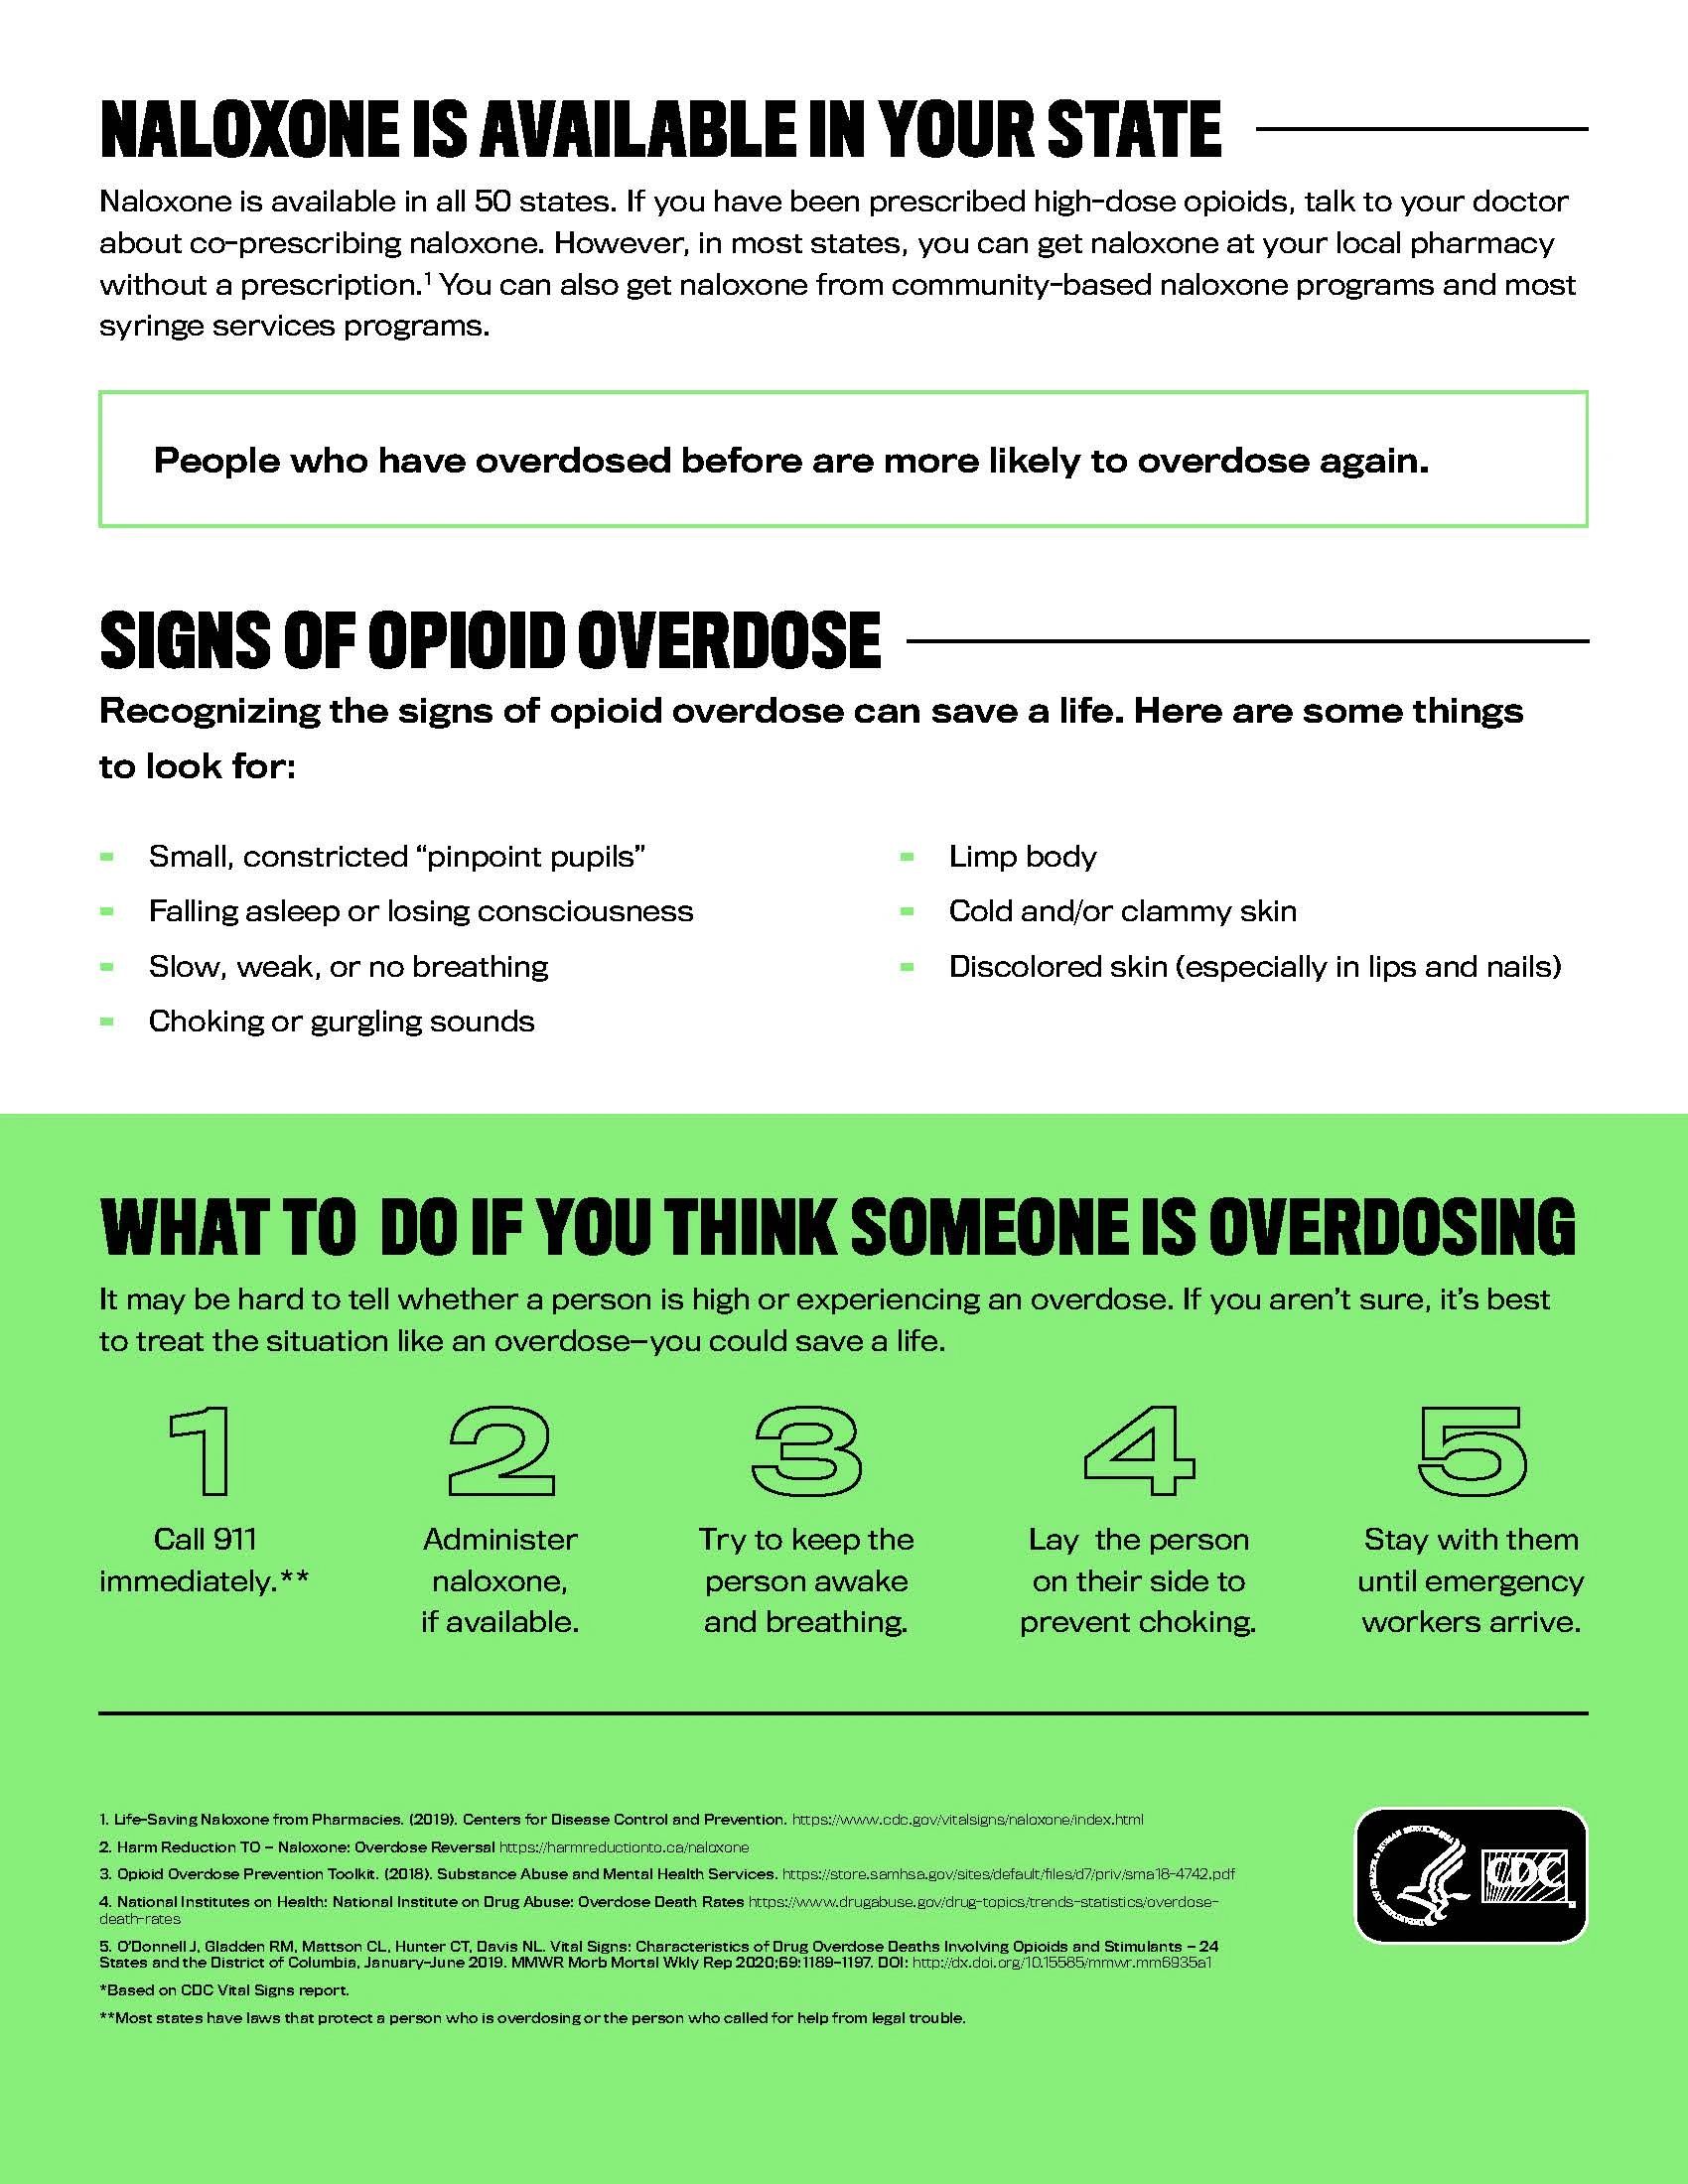 Signs of Opioid Overdose - CDC factsheet